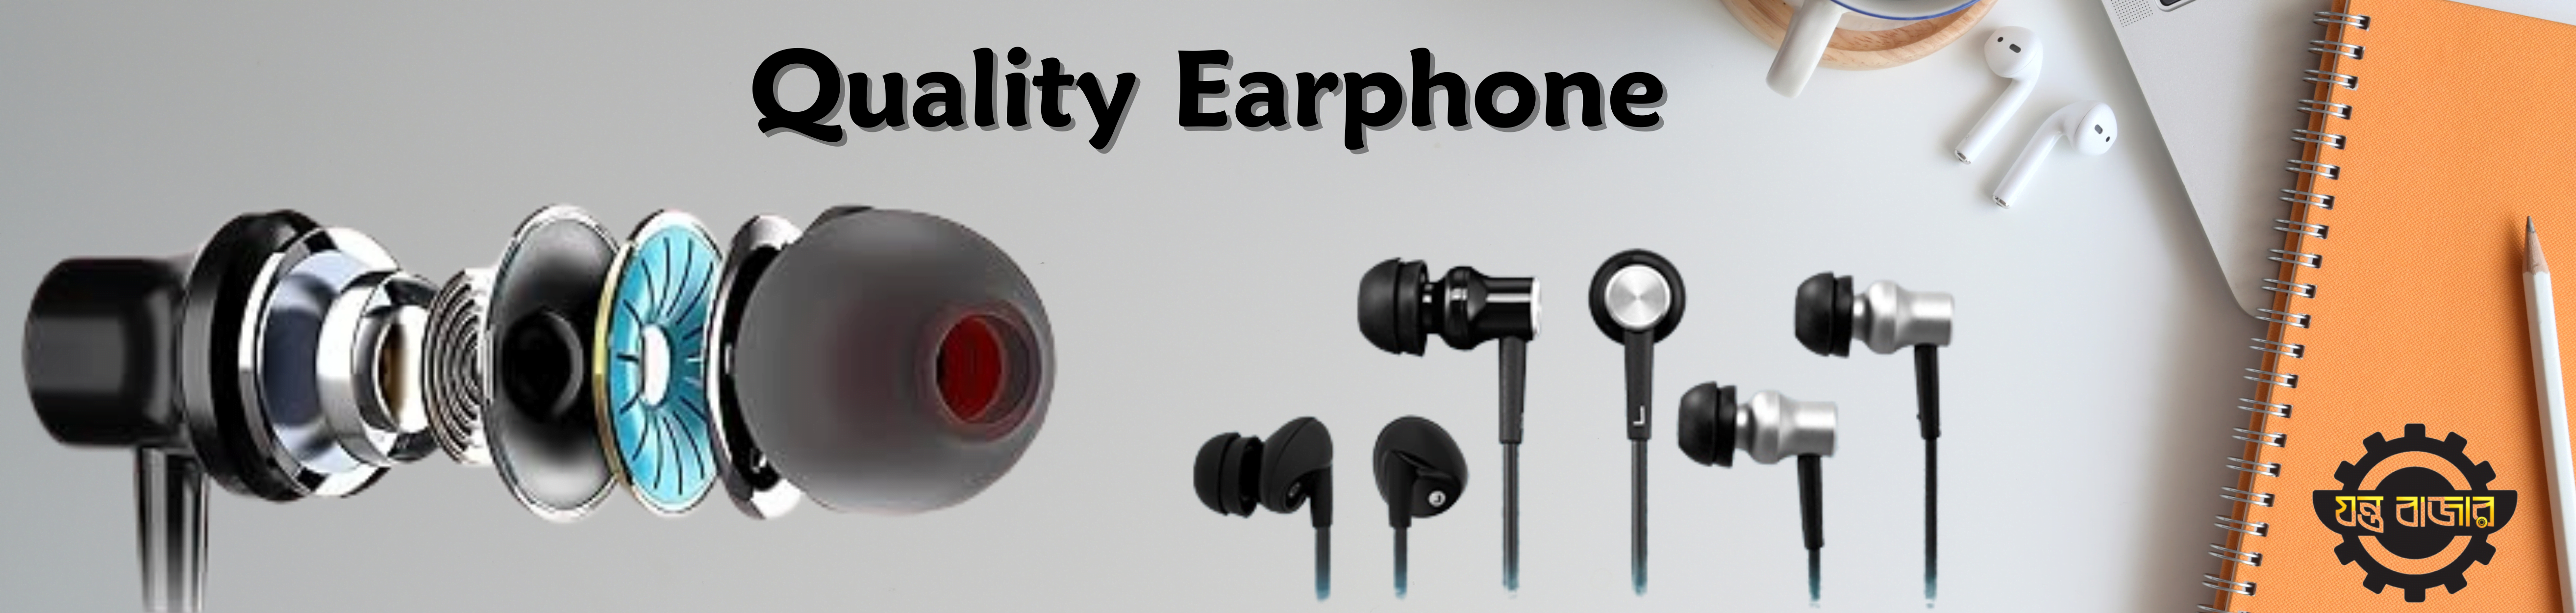 Quality Earphone (1) (1)